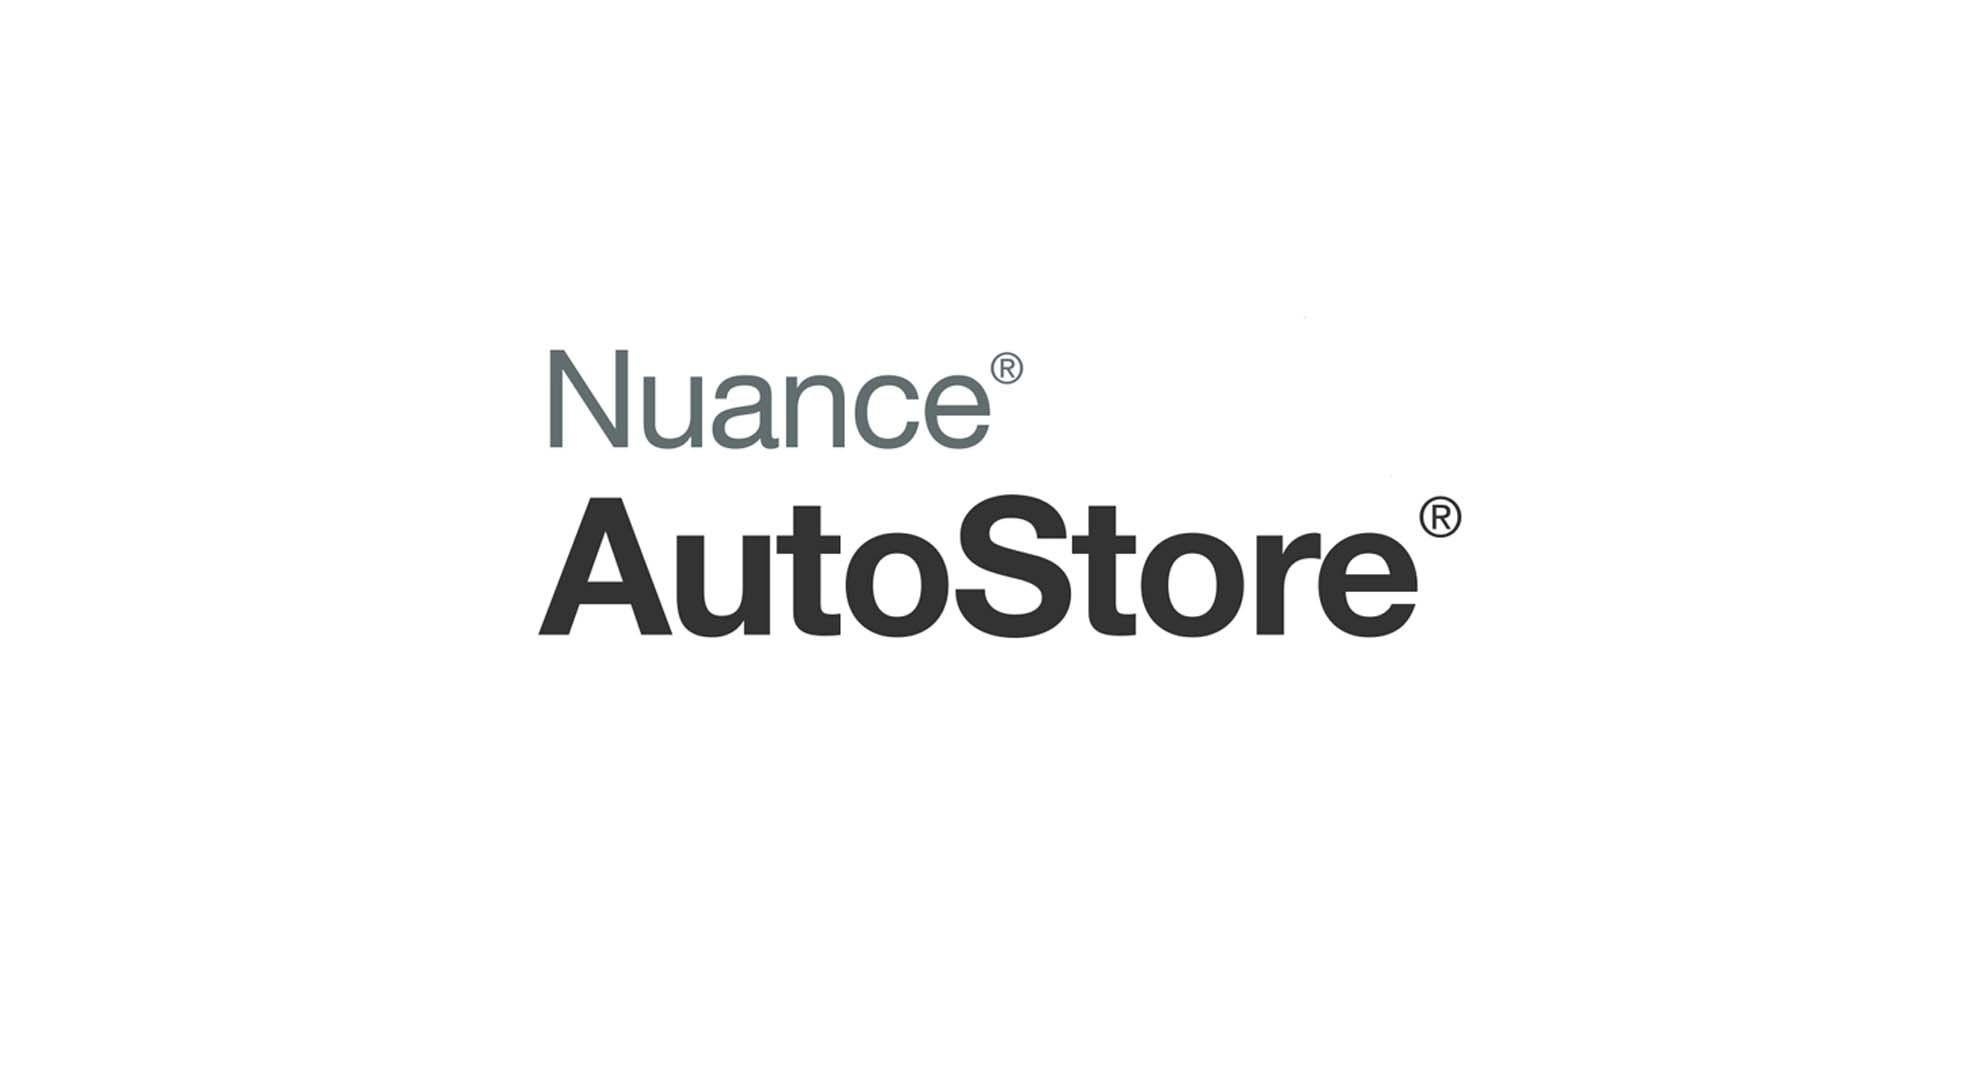 AutoStore Logo - Nuance Autostore Logo 1920px Technology Group